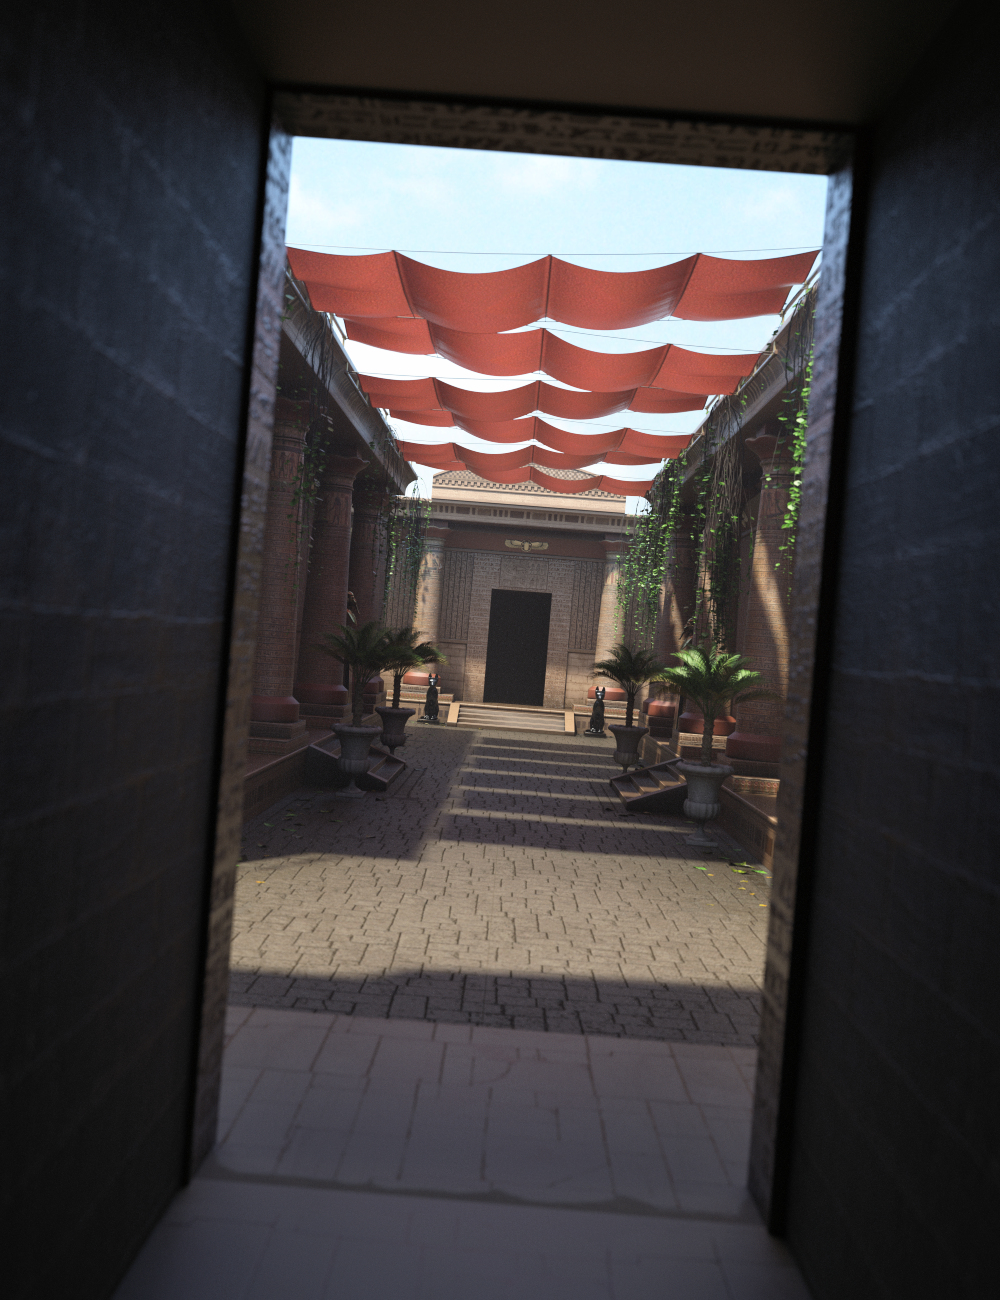 Hypostyle Hallway by: Merlin Studios, 3D Models by Daz 3D